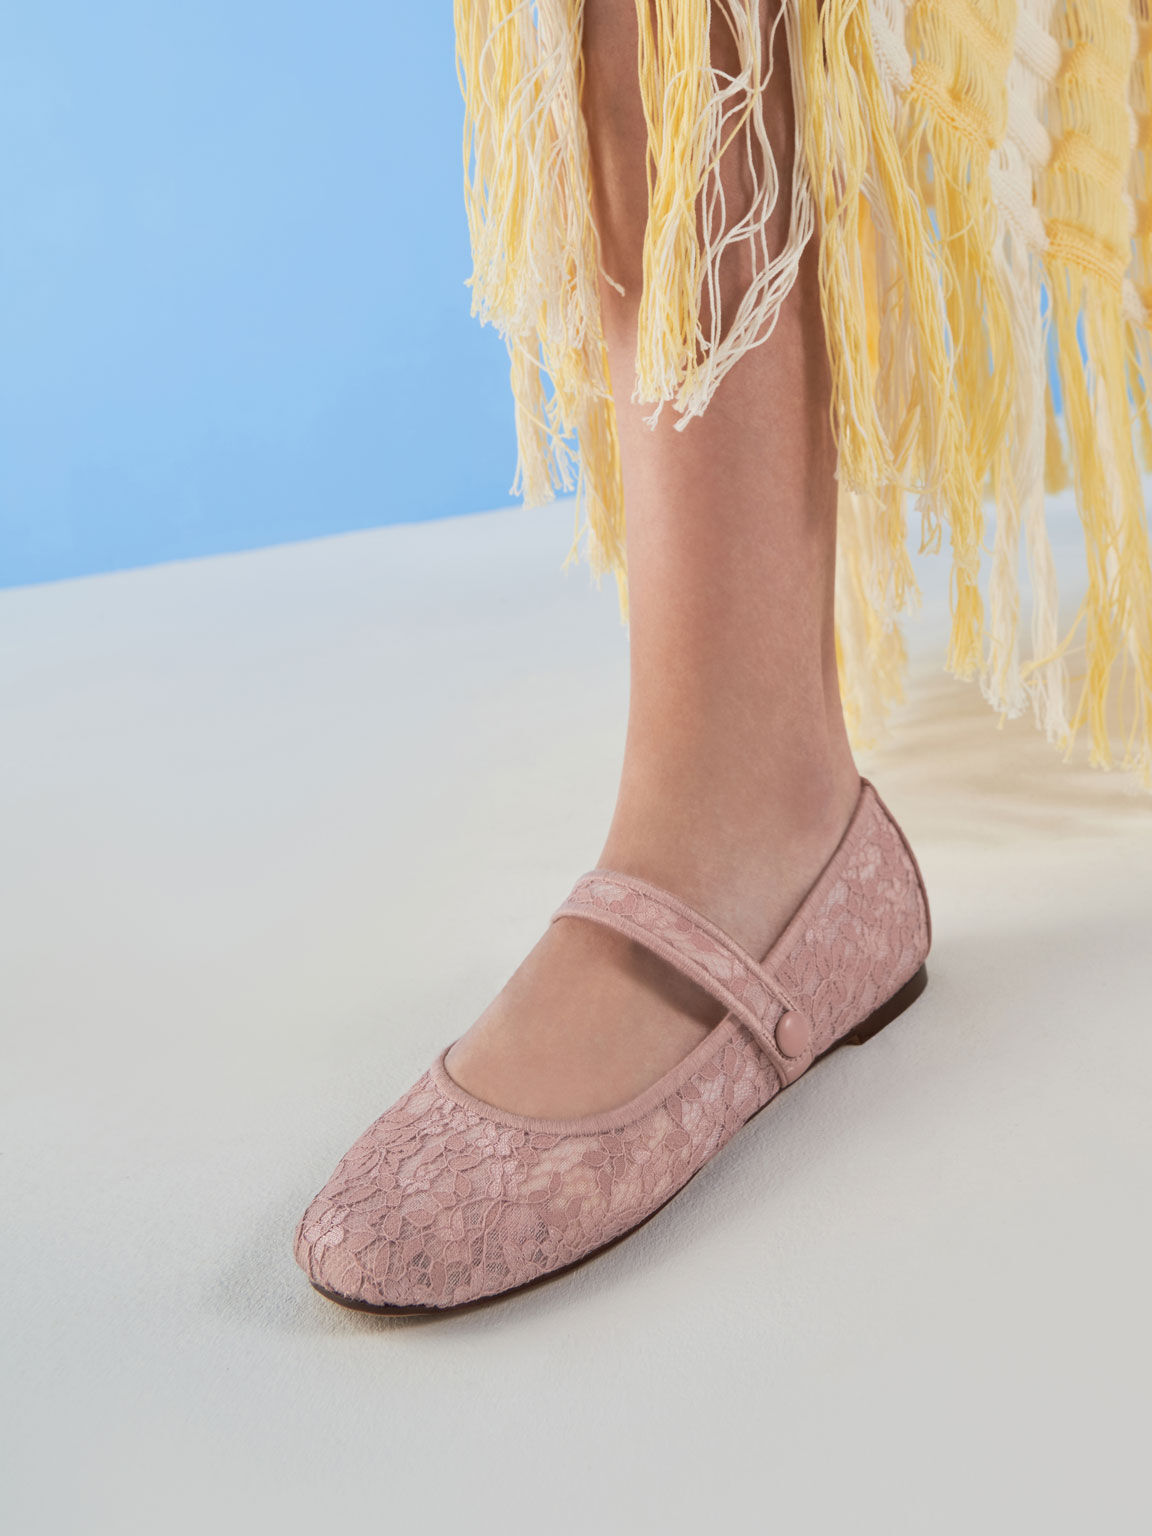 Lace & Mesh Mary Jane Ballerina Flats, Pink, hi-res